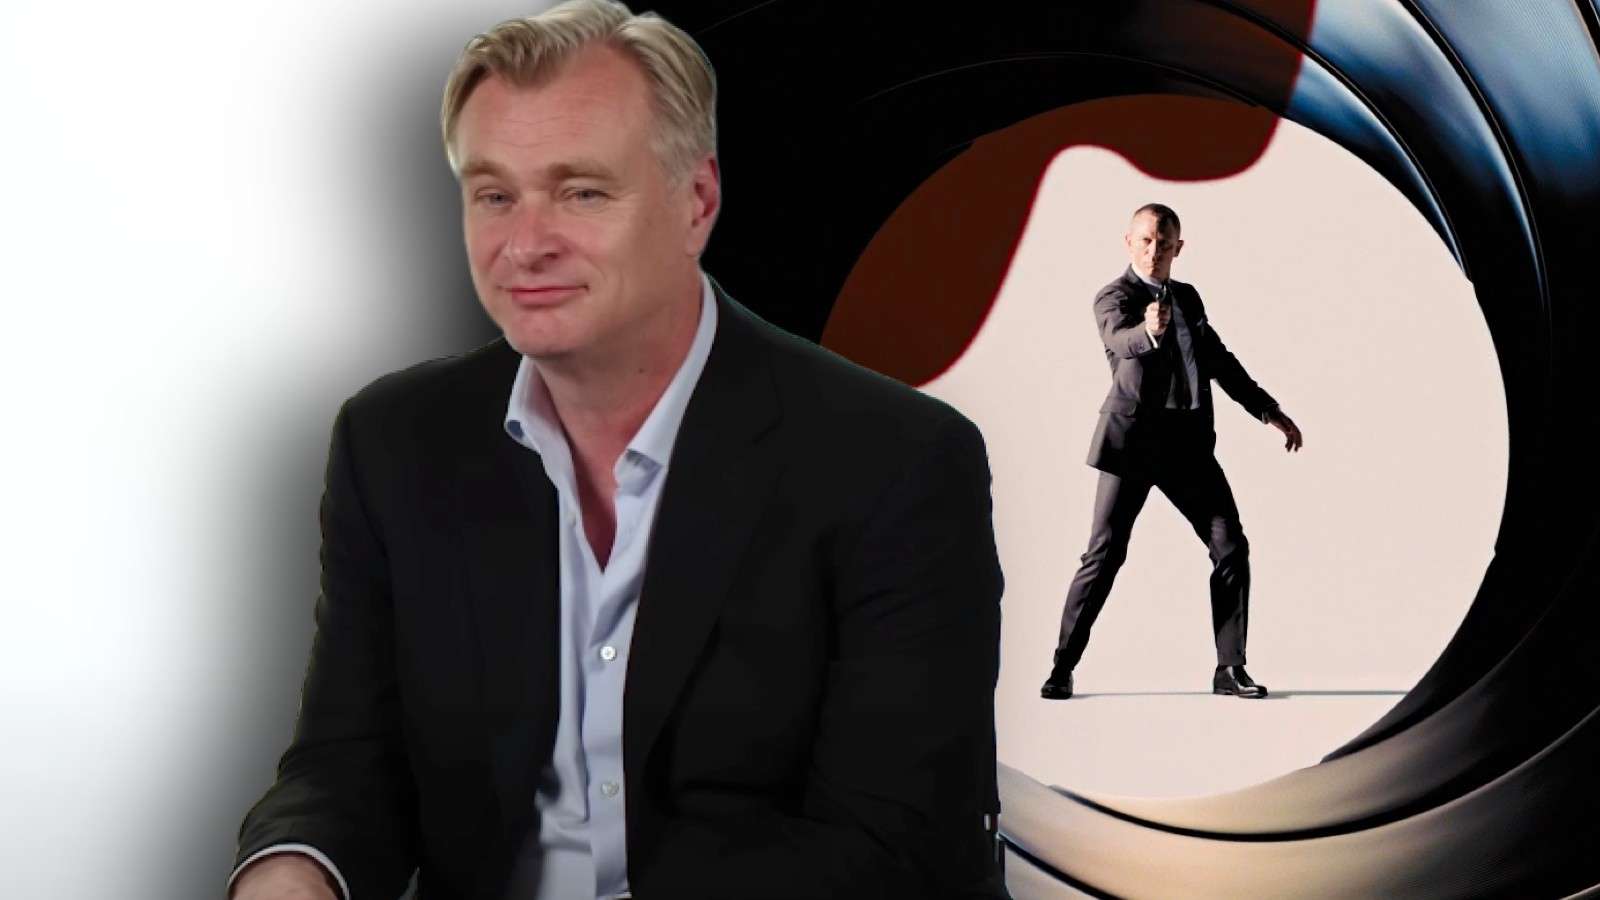 Christopher Nolan and the James Bond barrel shot